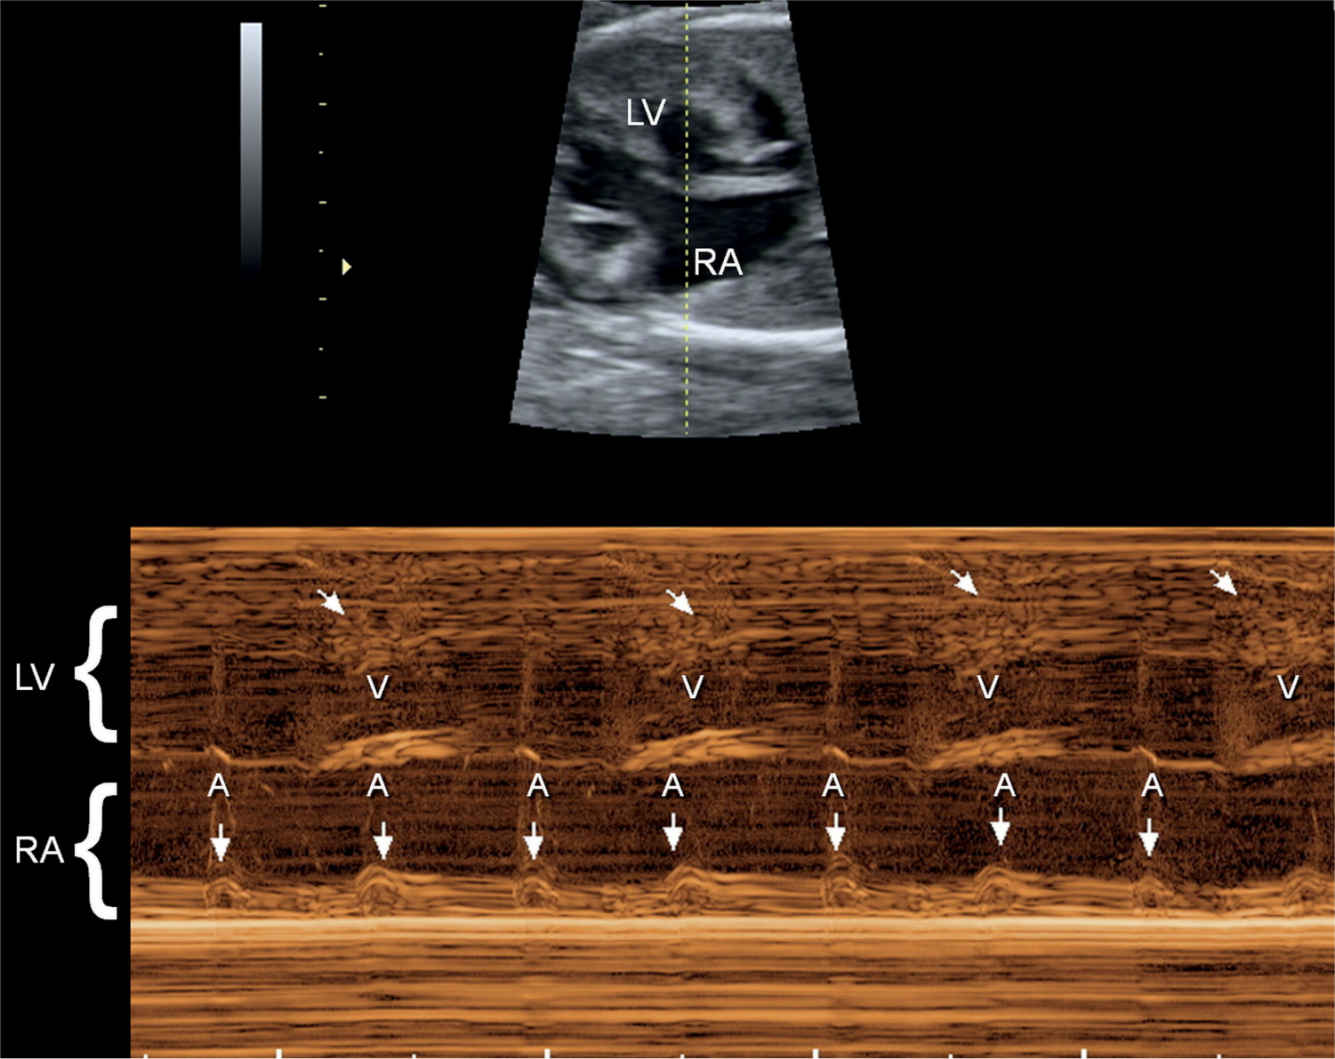 Second-degree atrioventricular block (fetal echocardiography